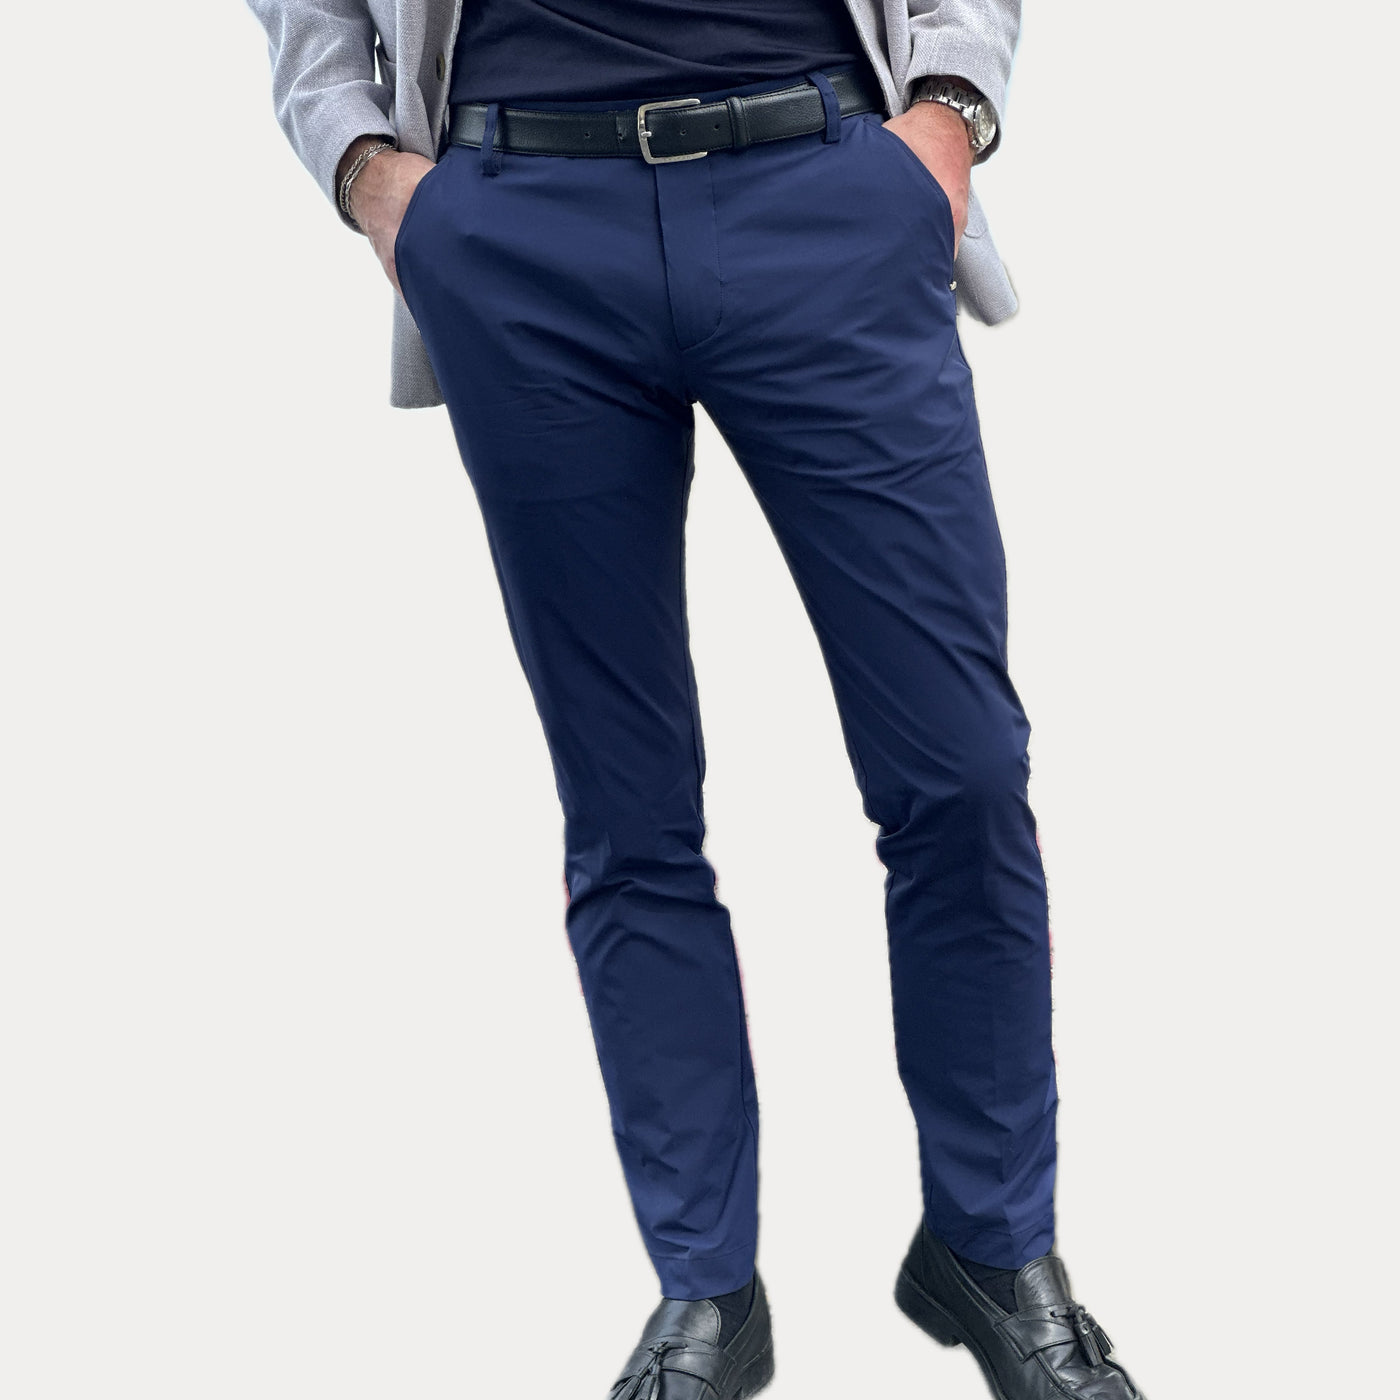 ENTRE AMIS - pantalone blu tessuto elastico